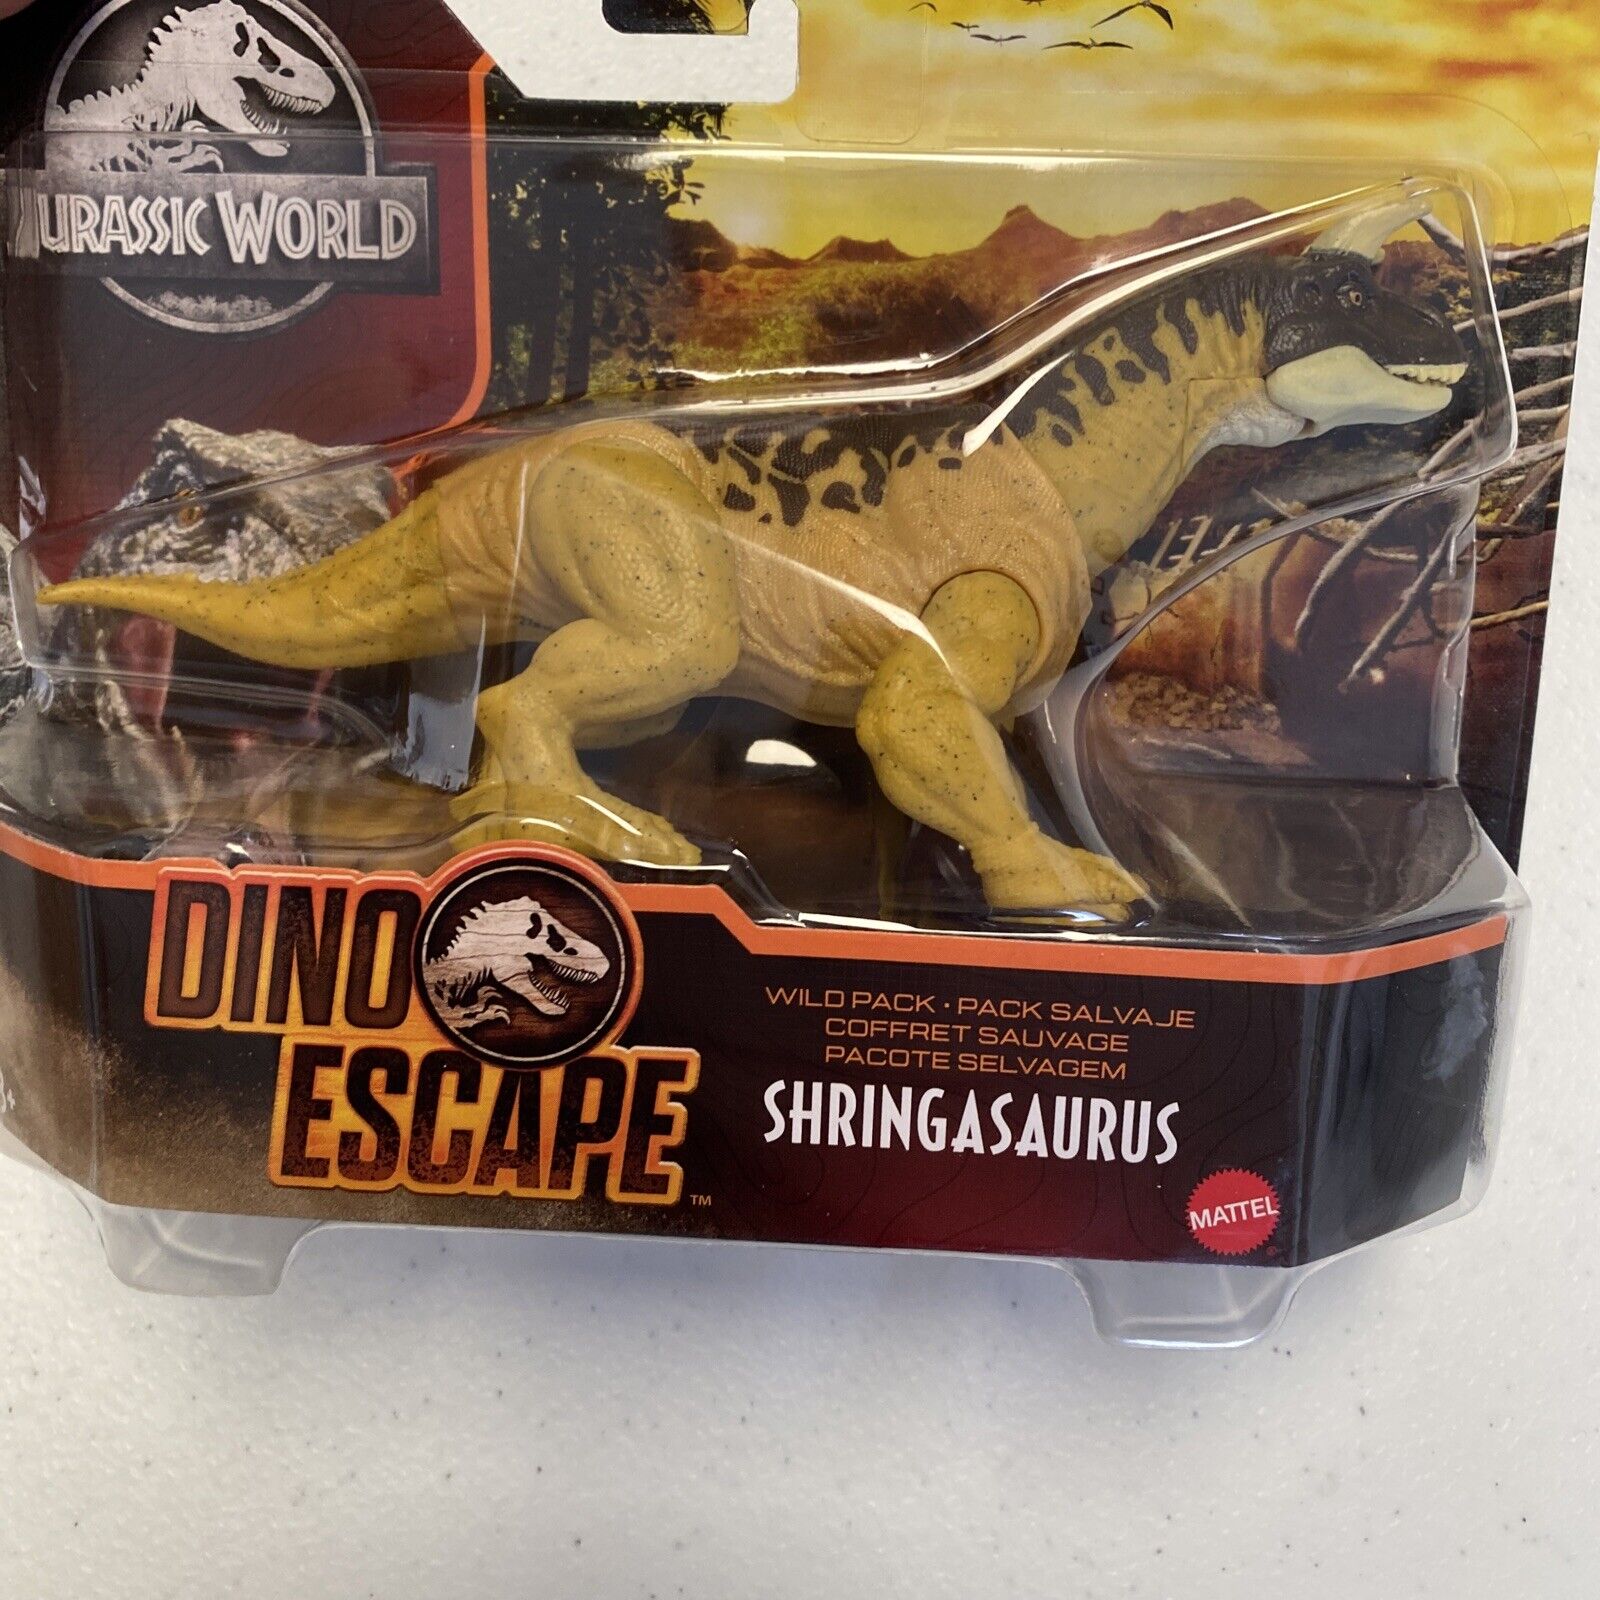 NEW - Jurassic World 2021 Shringasaurus DINOSAUR Figure Wild Pack Dino Escape